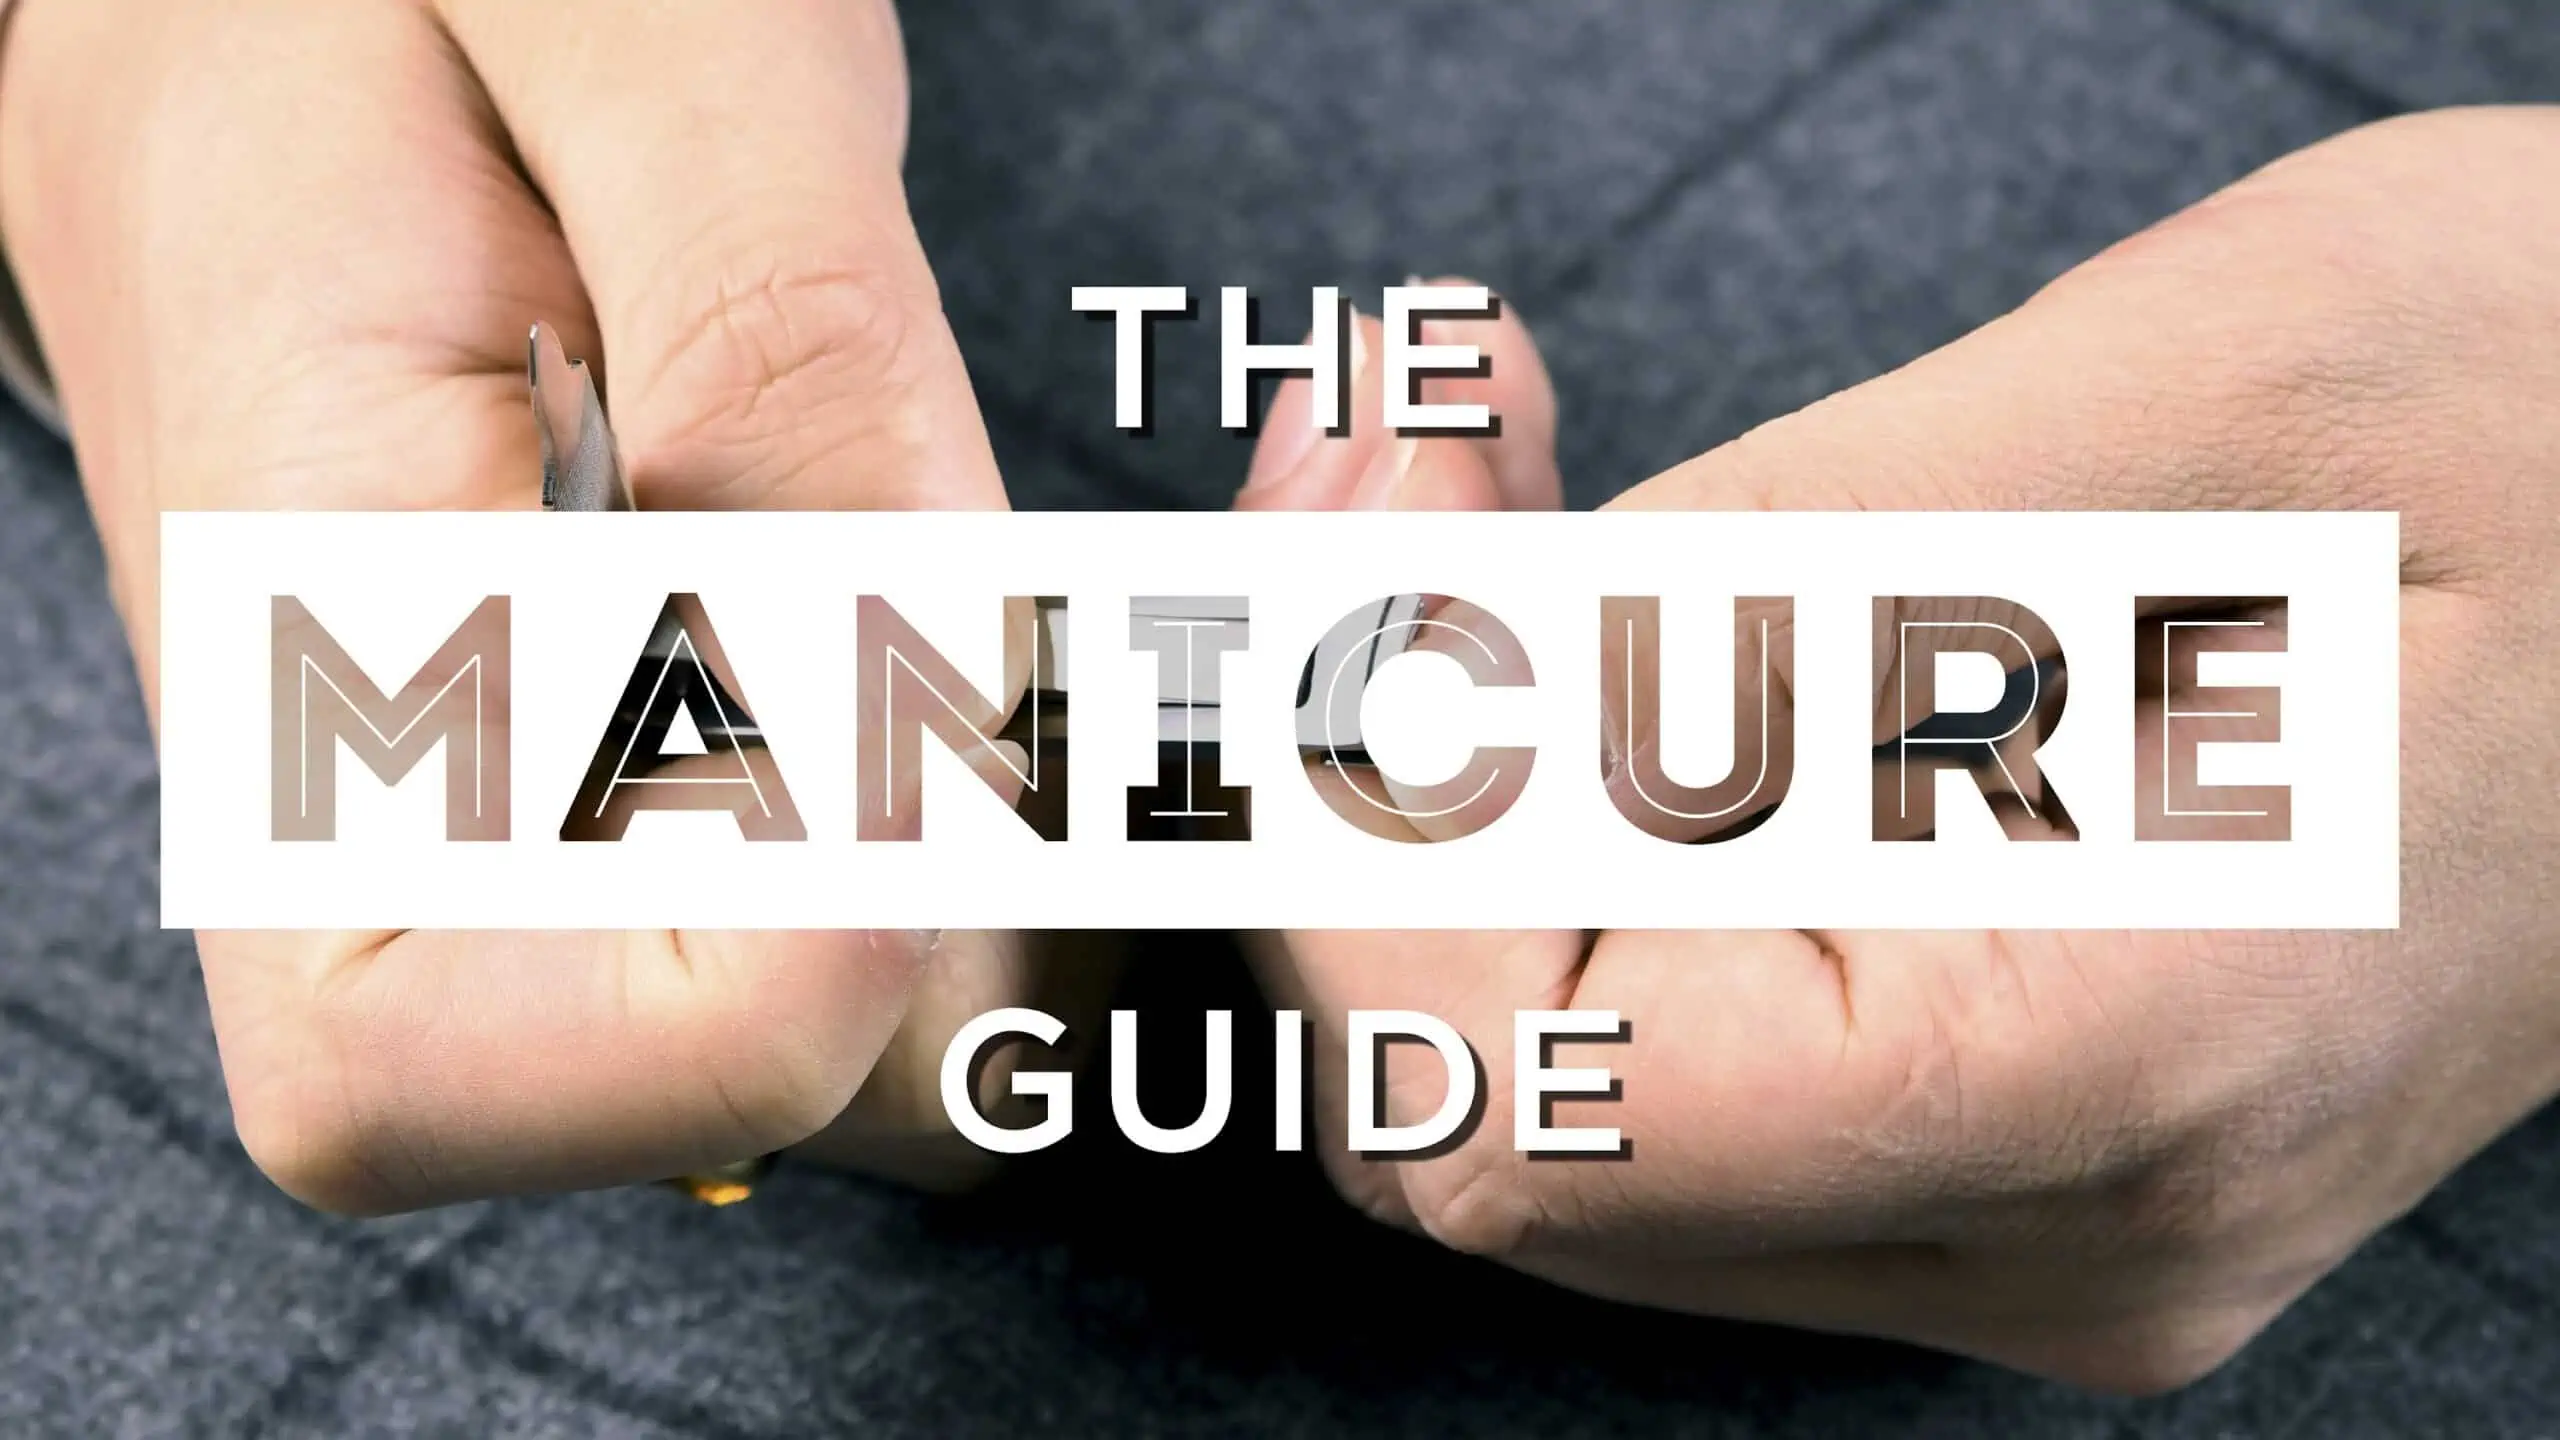 manicure guide 3840x2160 scaled